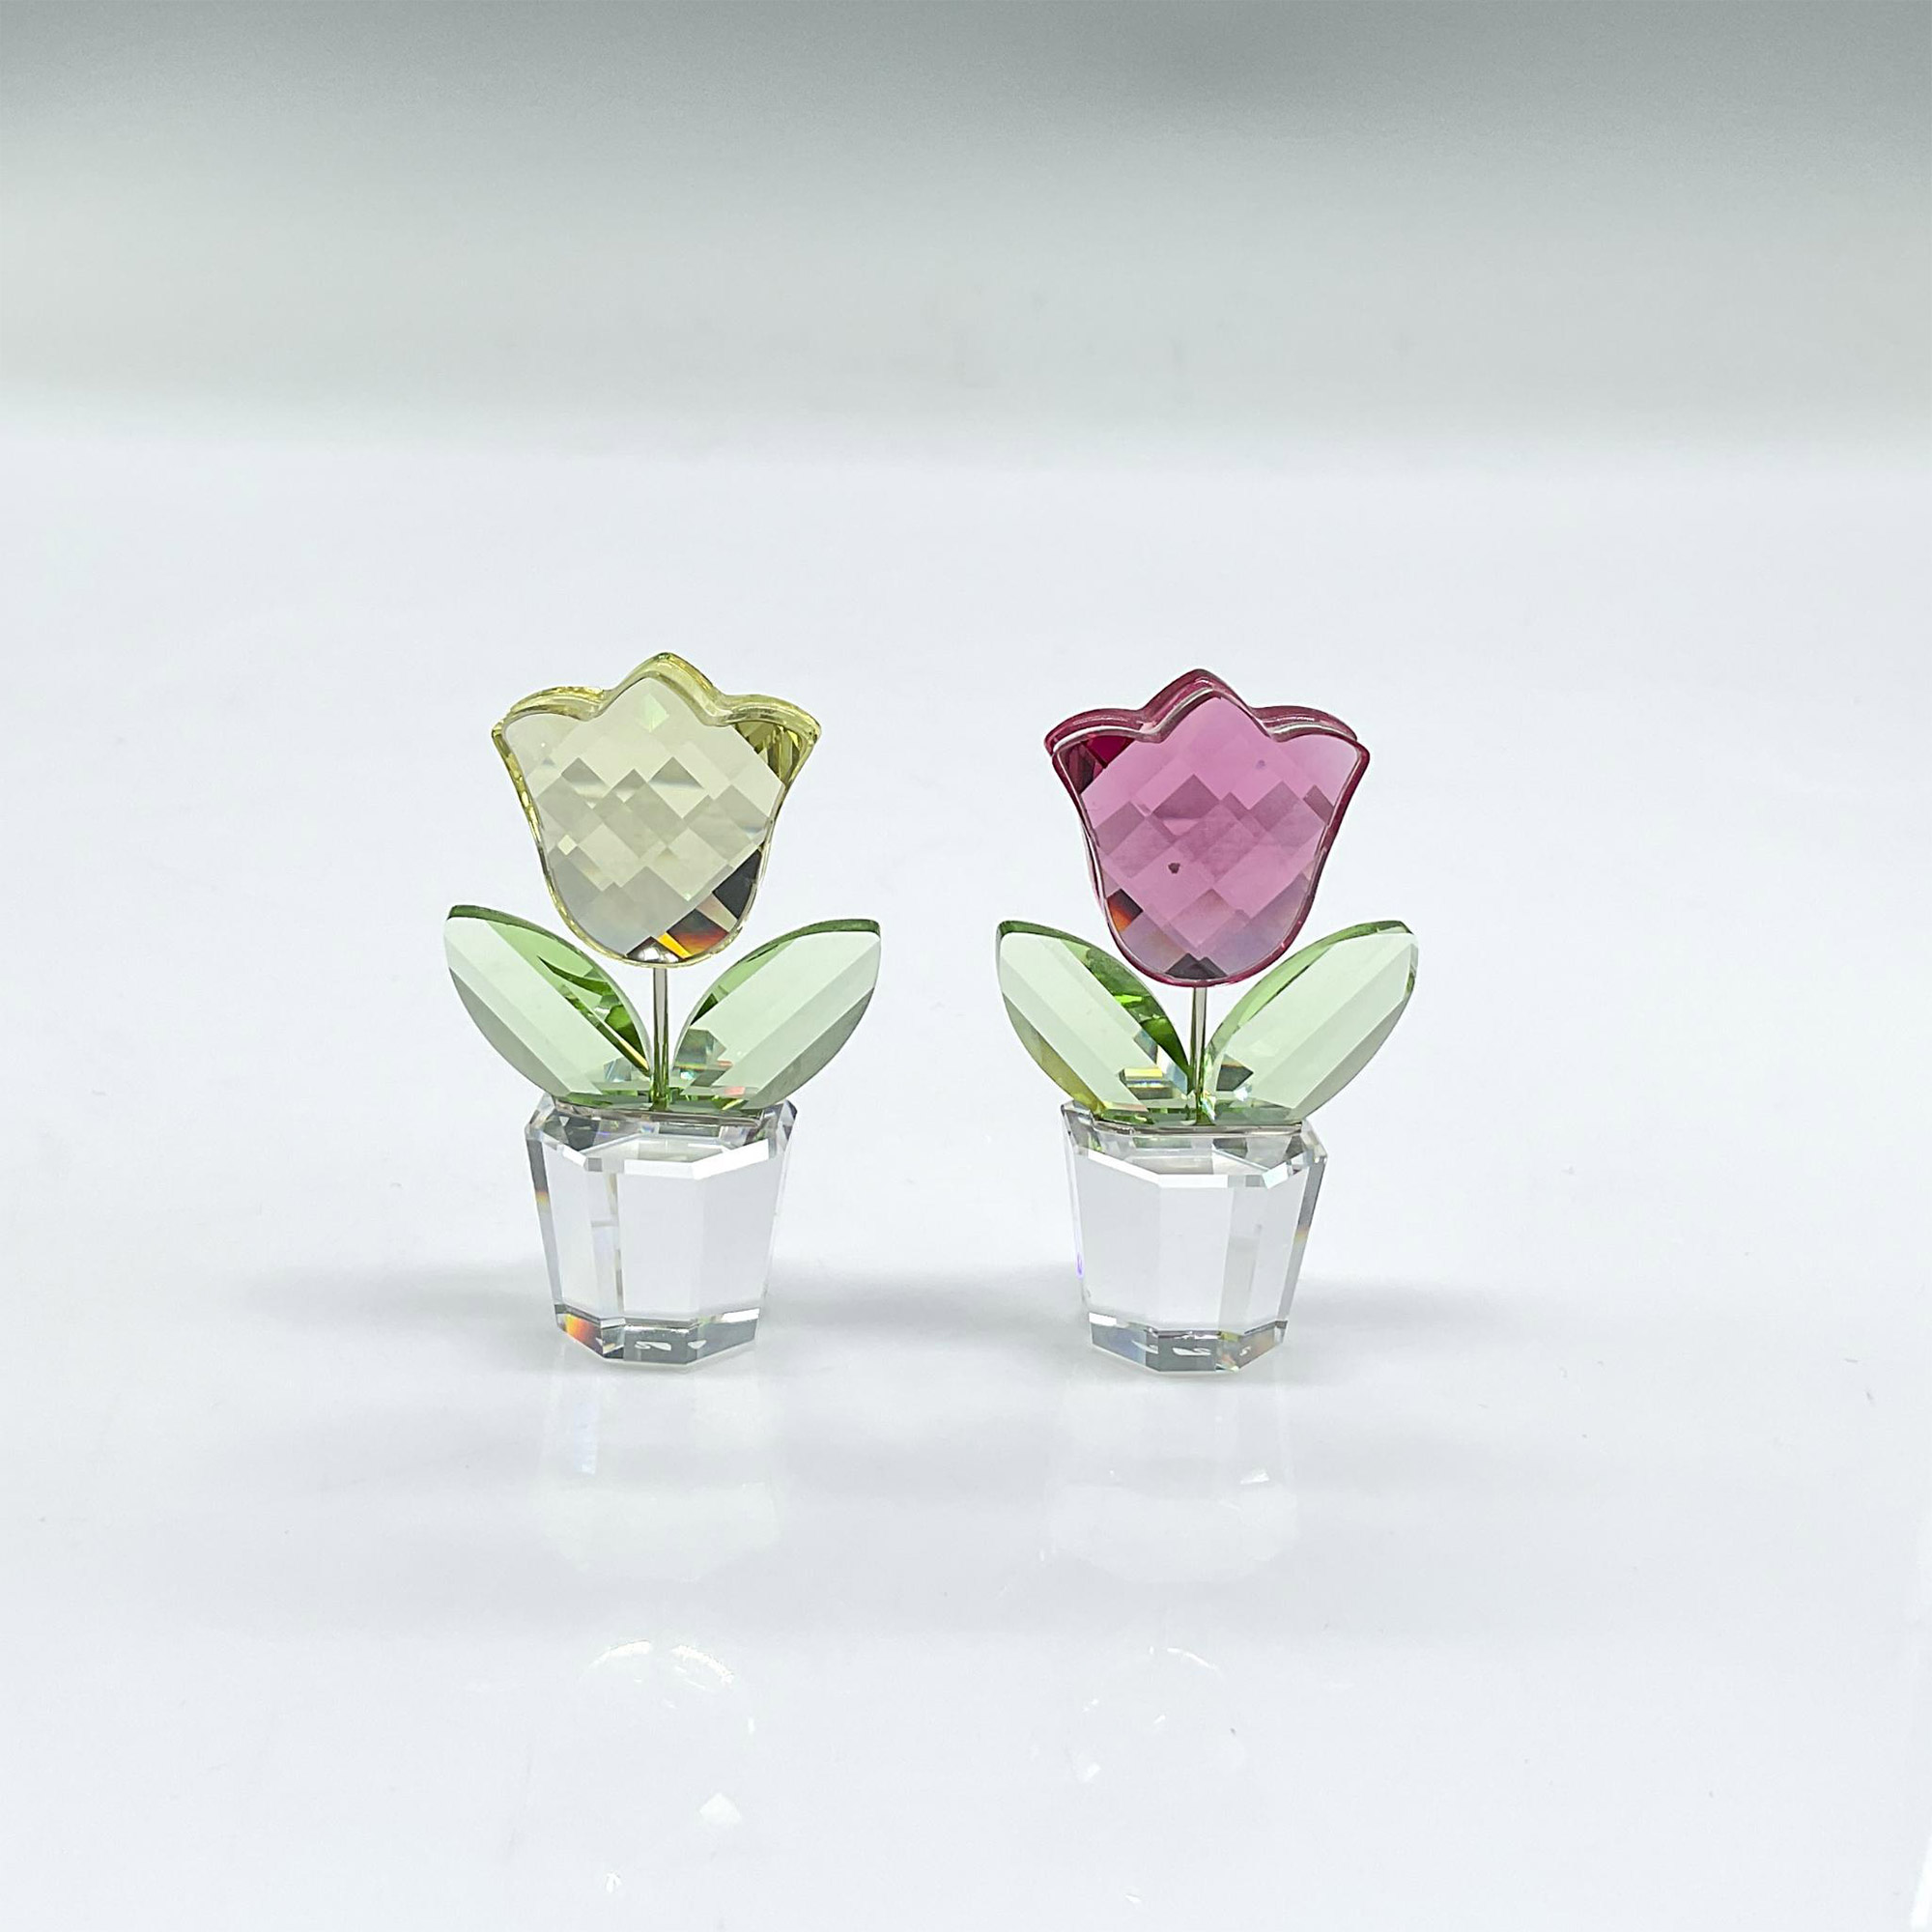 2pc Swarovski Crystal Figurines, Pink and Yellow Tulips - Image 2 of 4